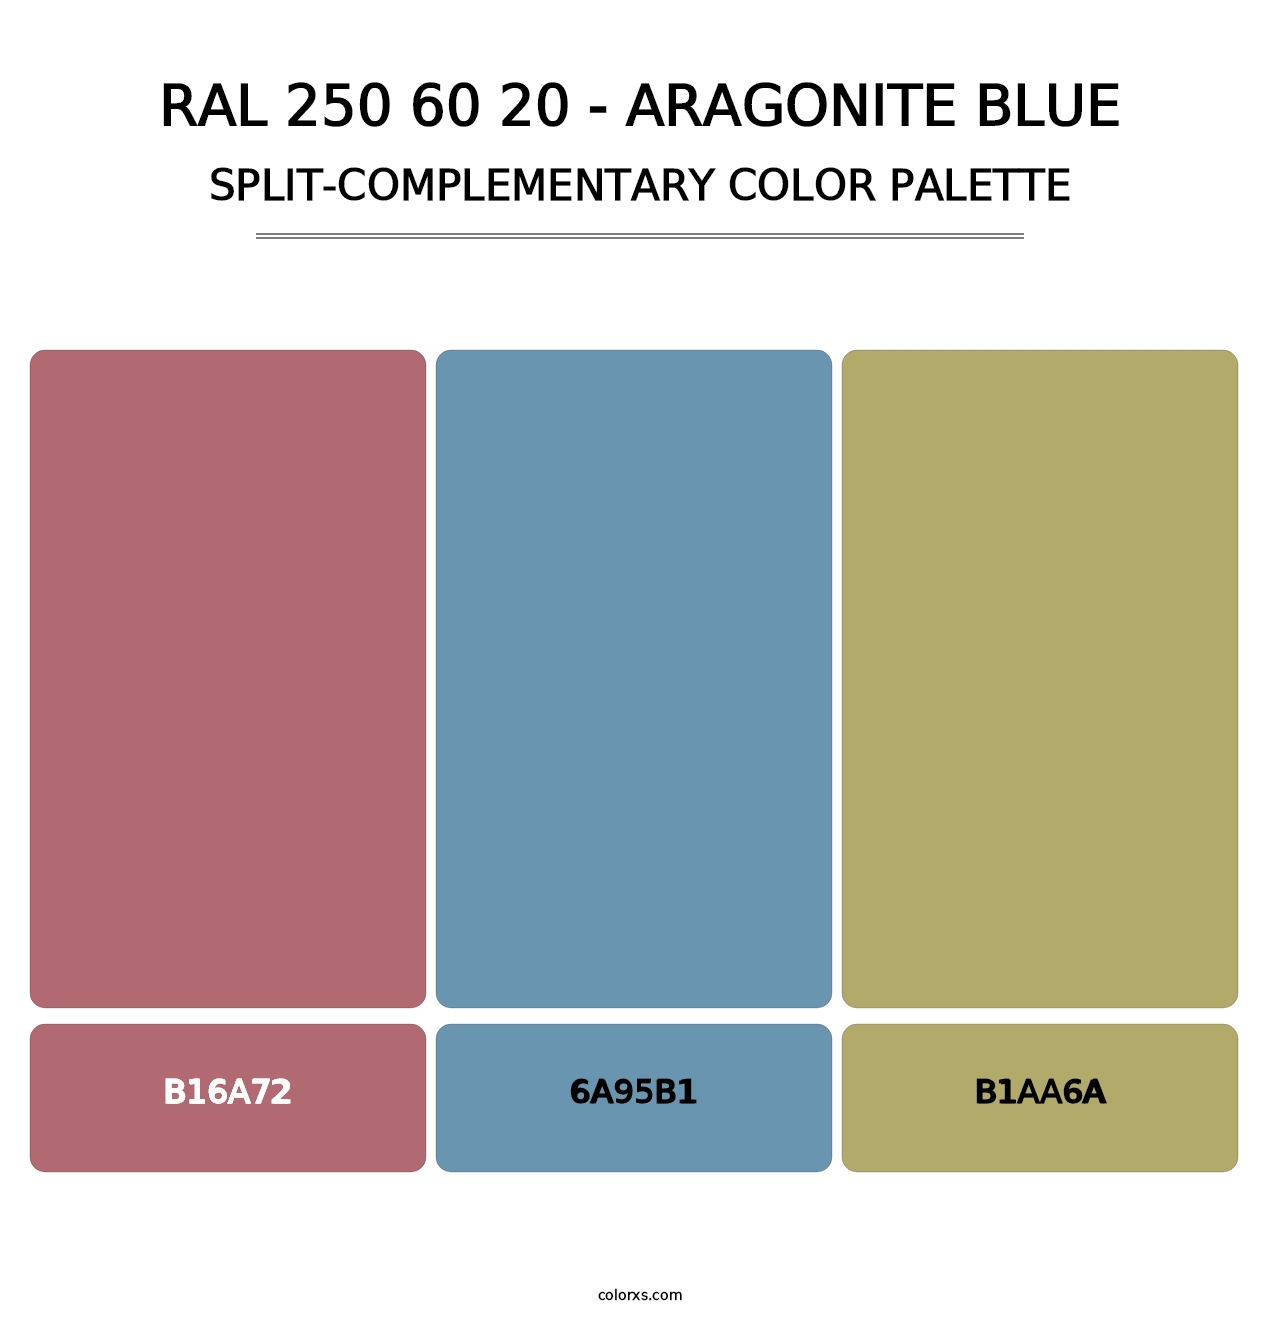 RAL 250 60 20 - Aragonite Blue - Split-Complementary Color Palette